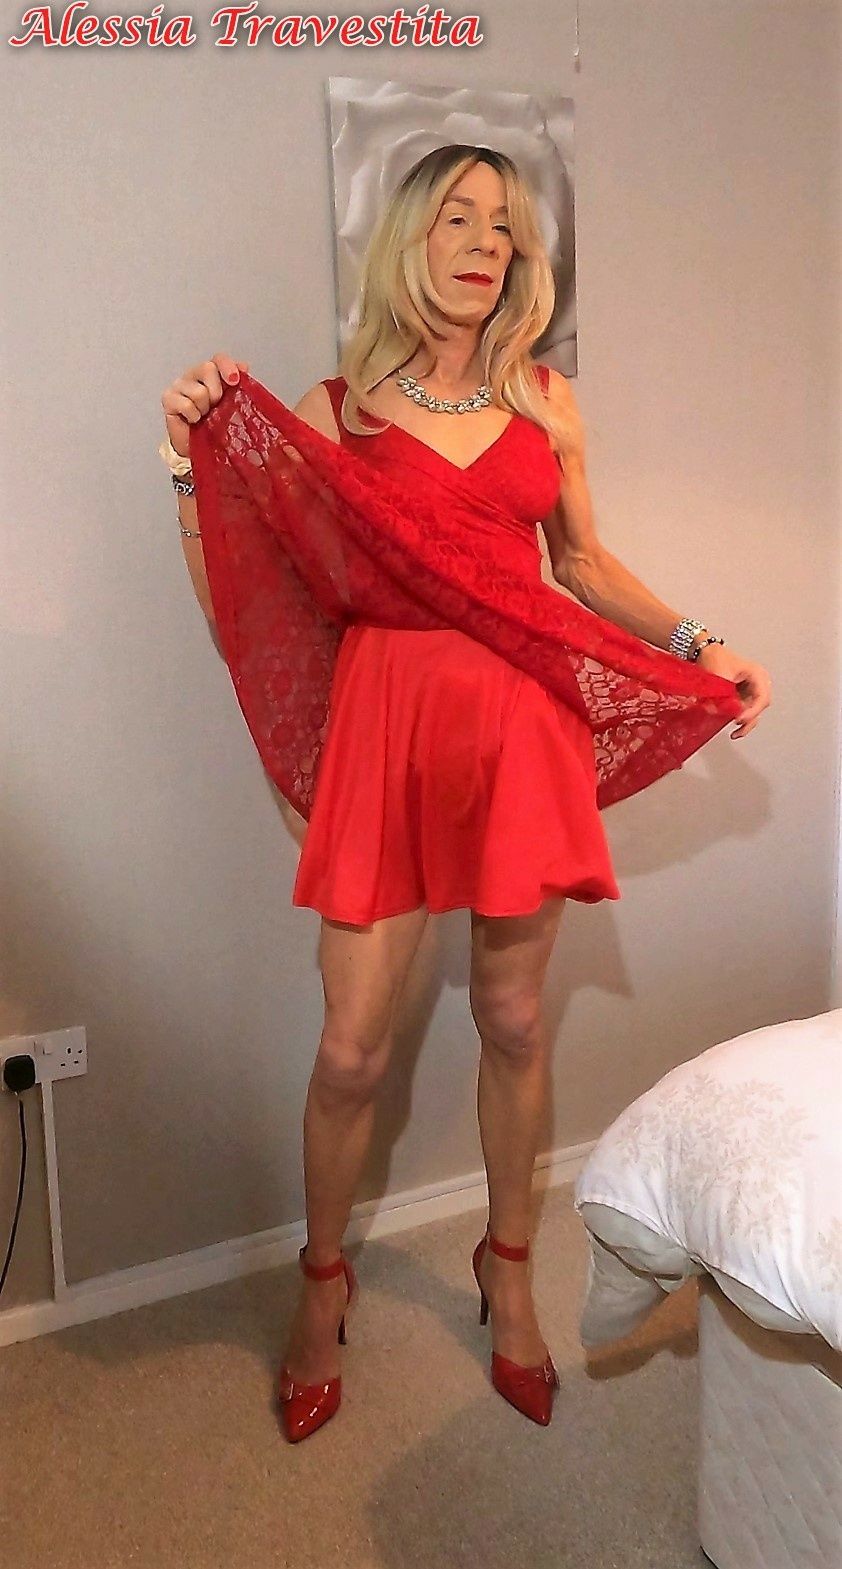 65 Alessia Travestita in Flirty Red Dress #39